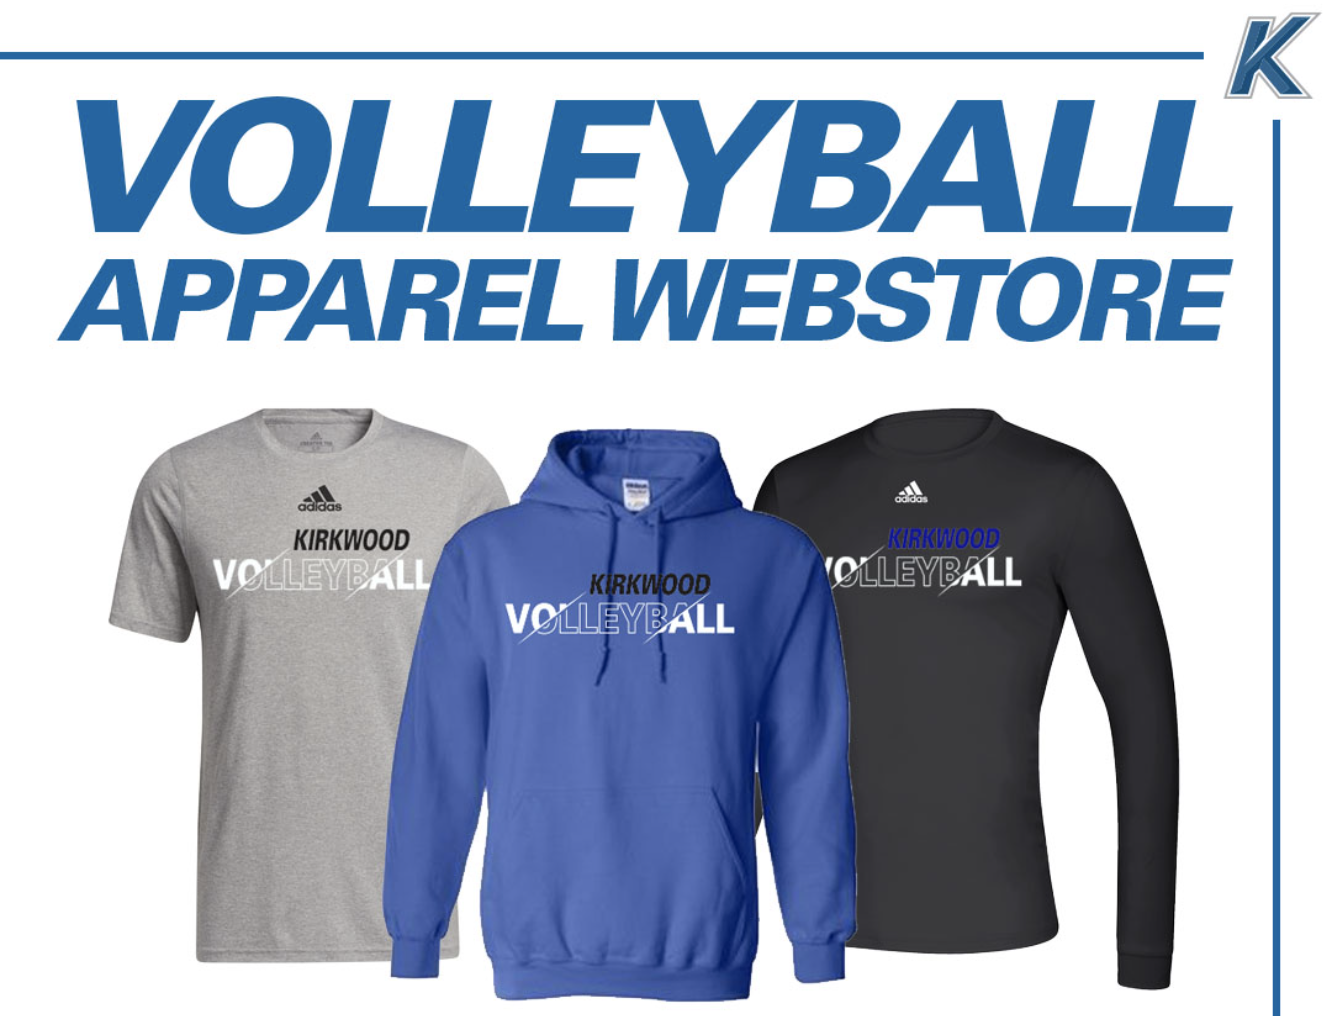 Kirkwood Volleyball Webstore - Deadline Extended!